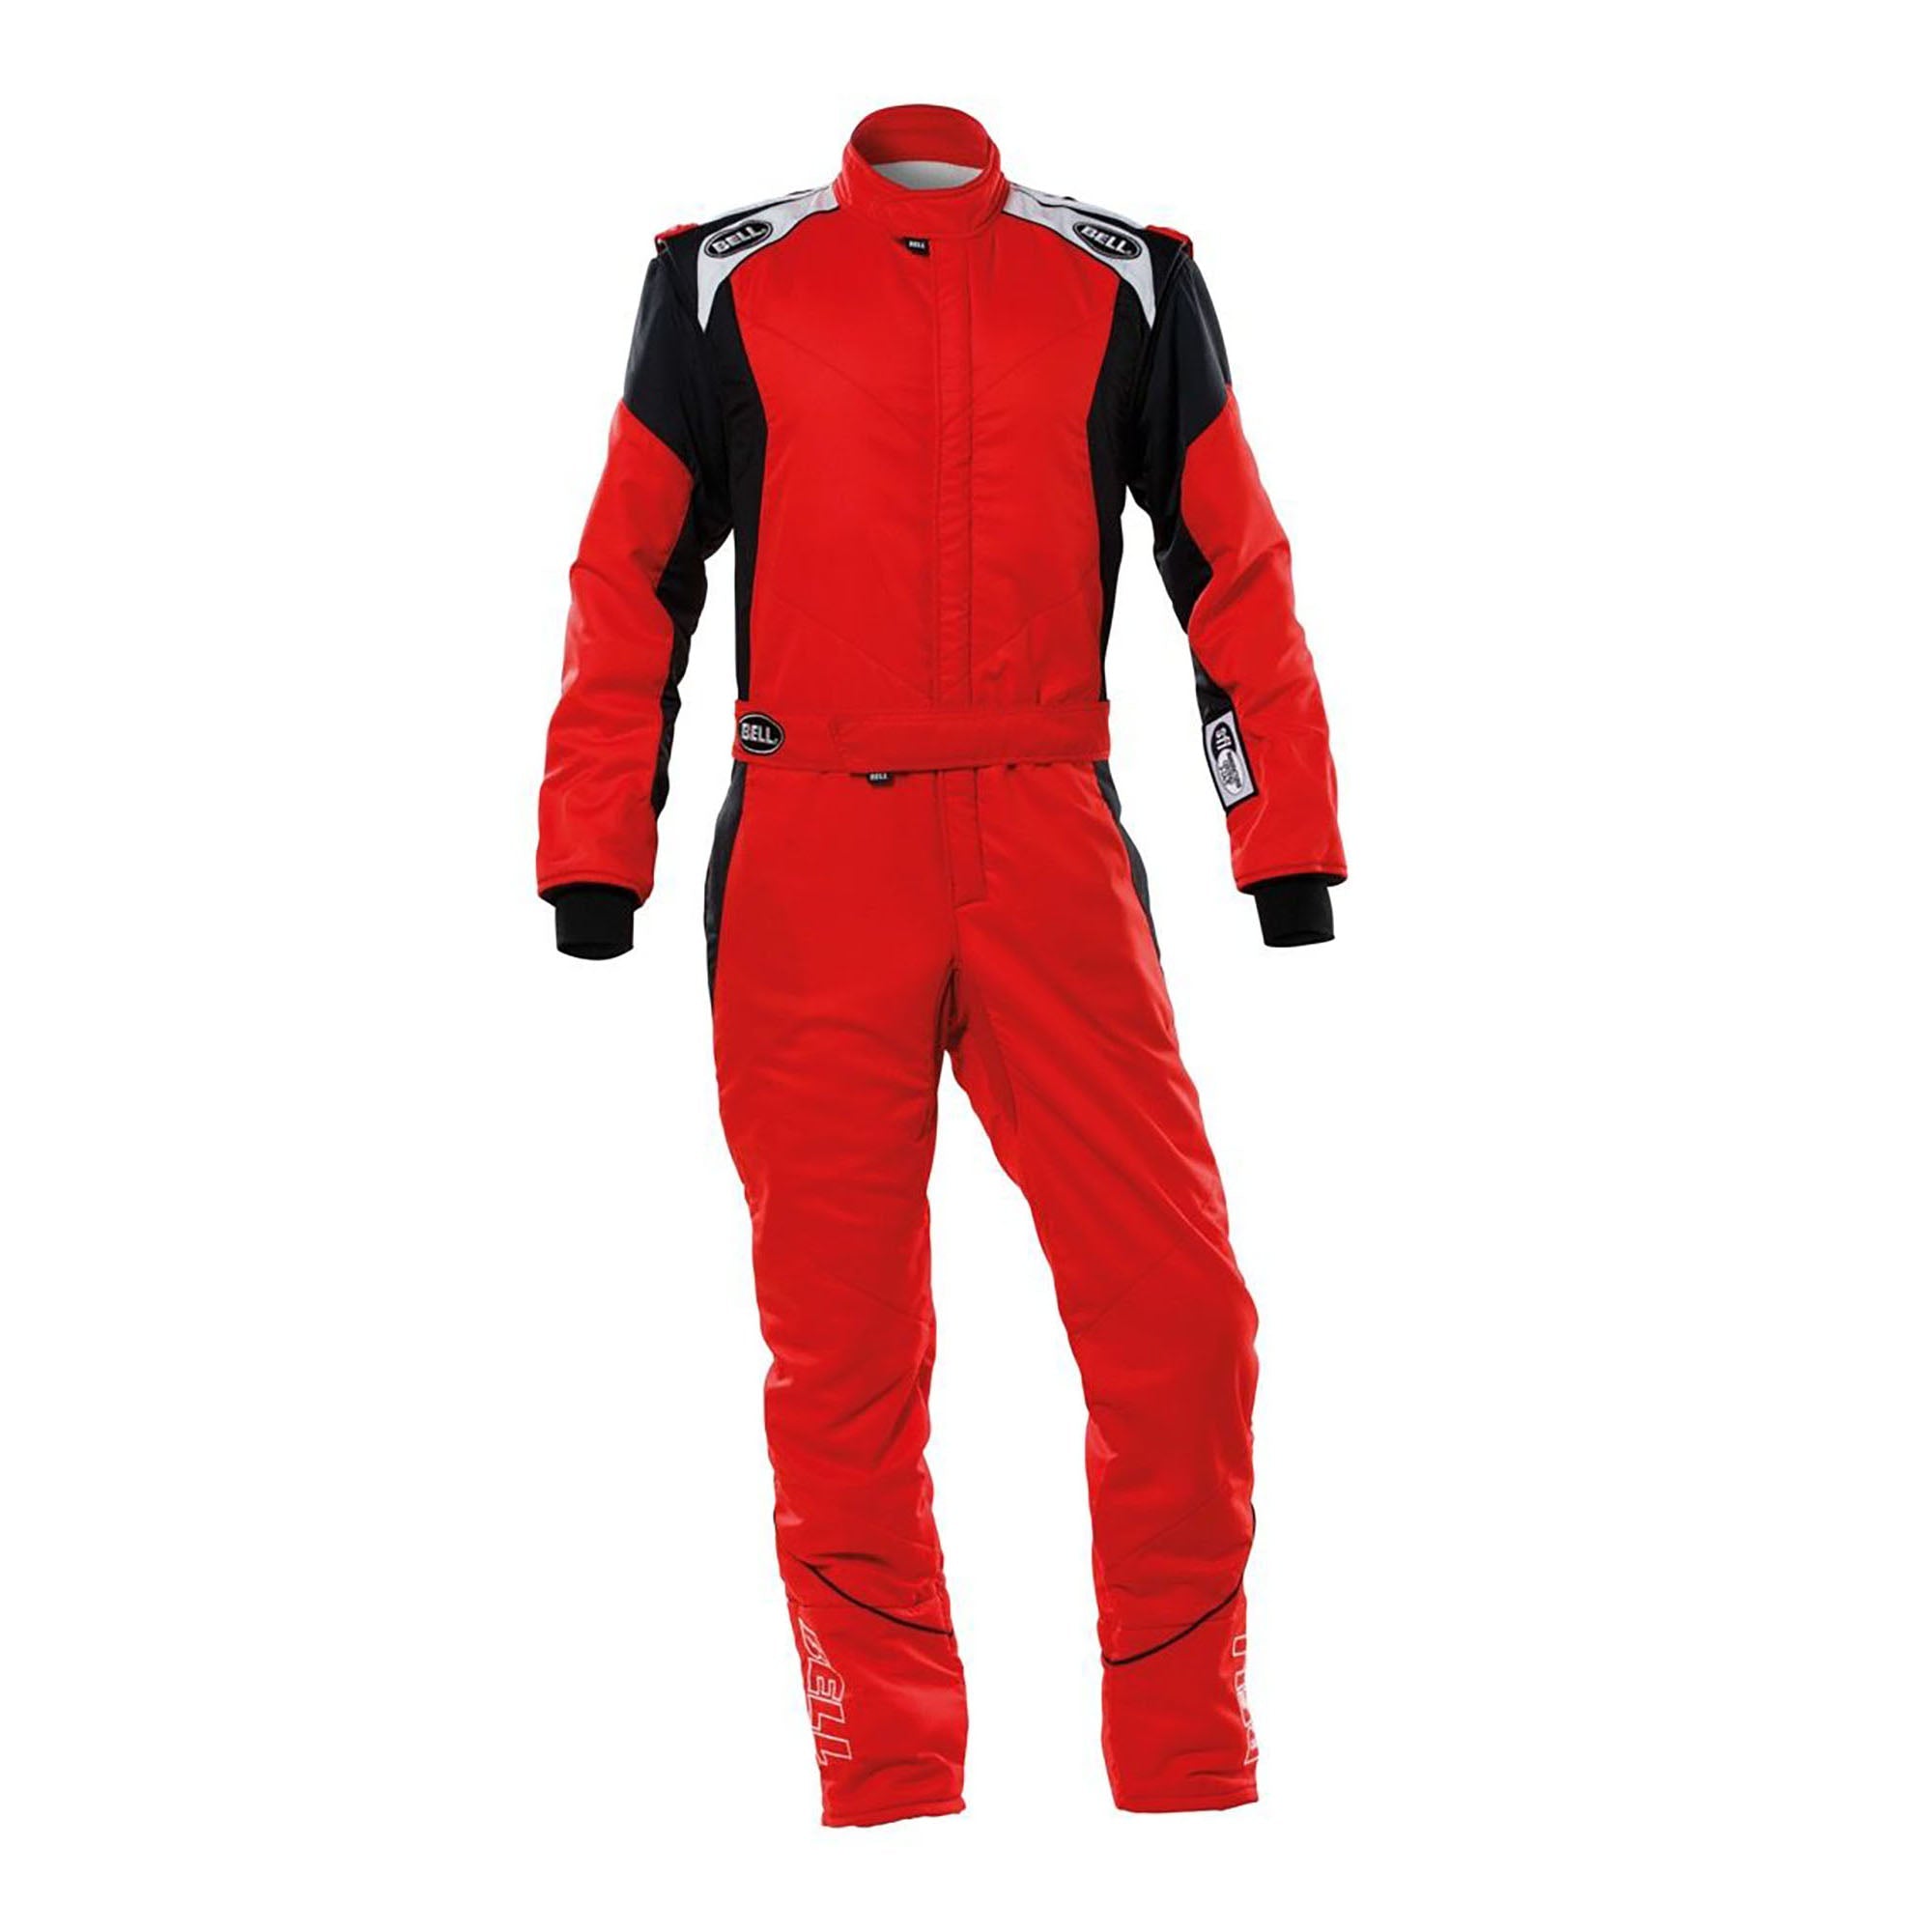 Bell Pro-TX Racing Suit